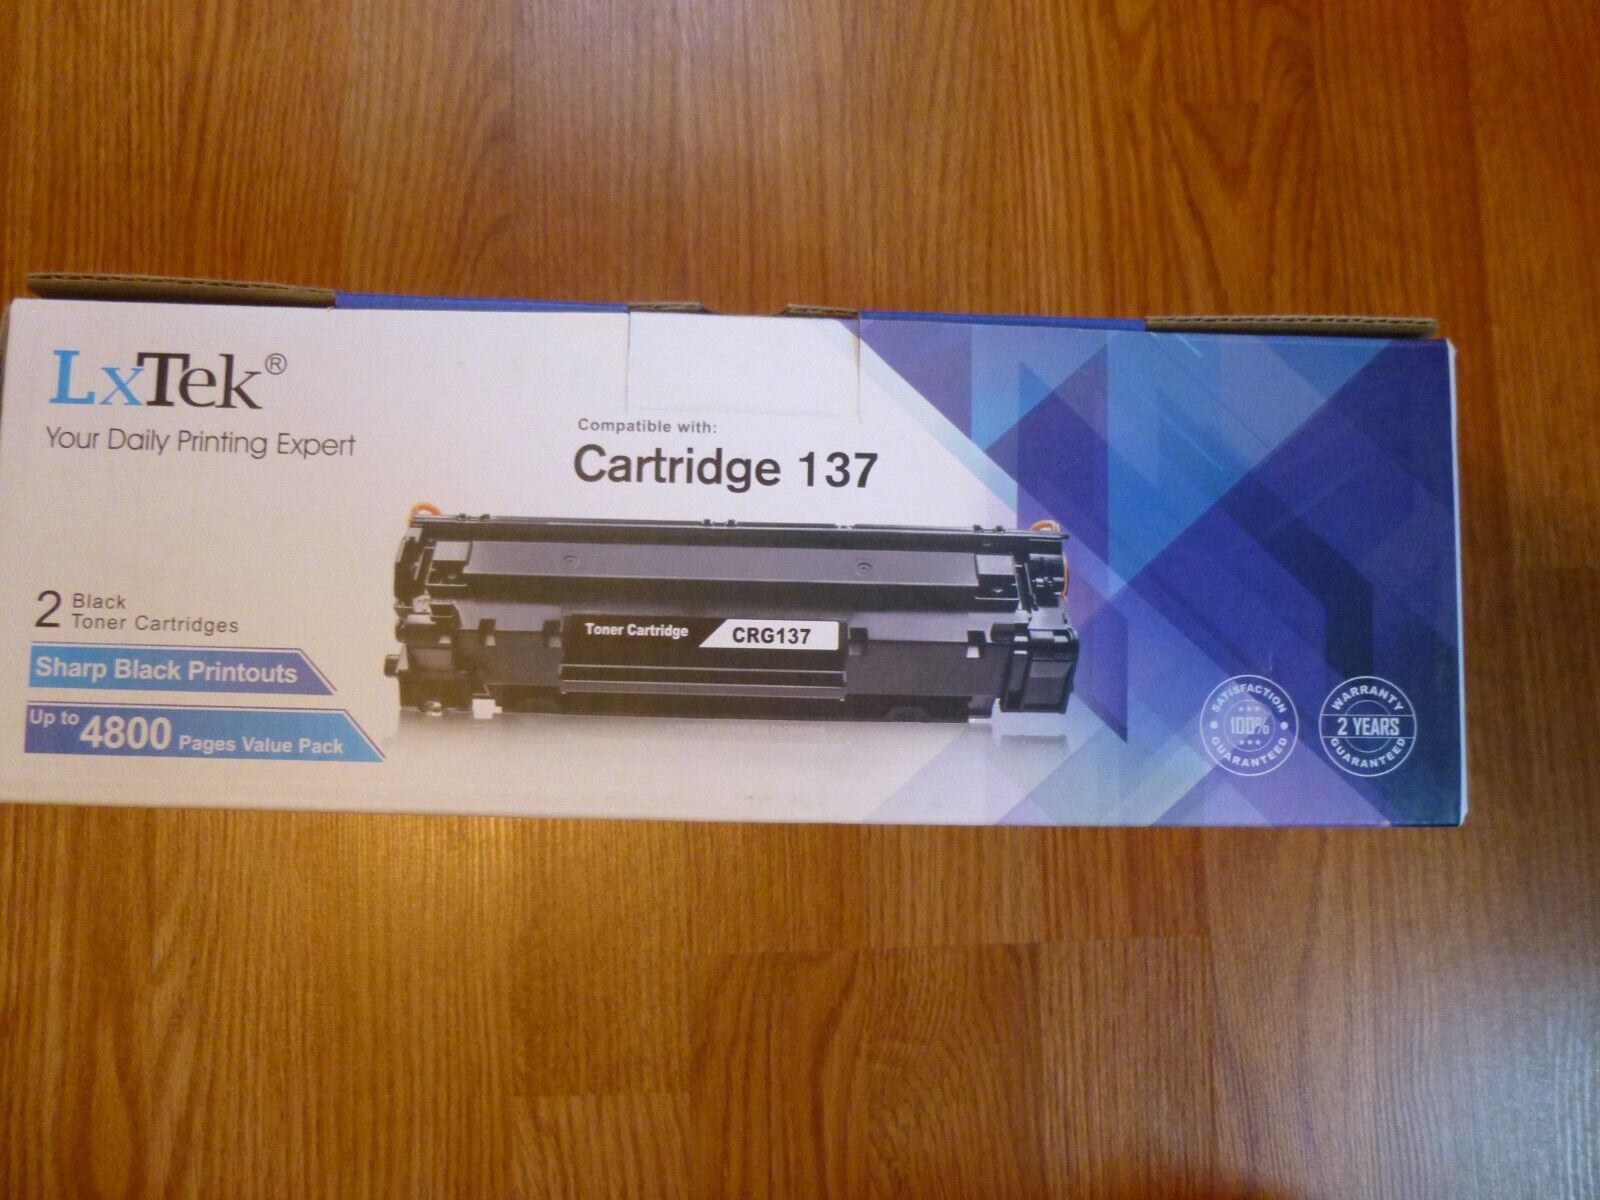 LxTek Black Toner Cartridge 137 2 pieces Printer Ink